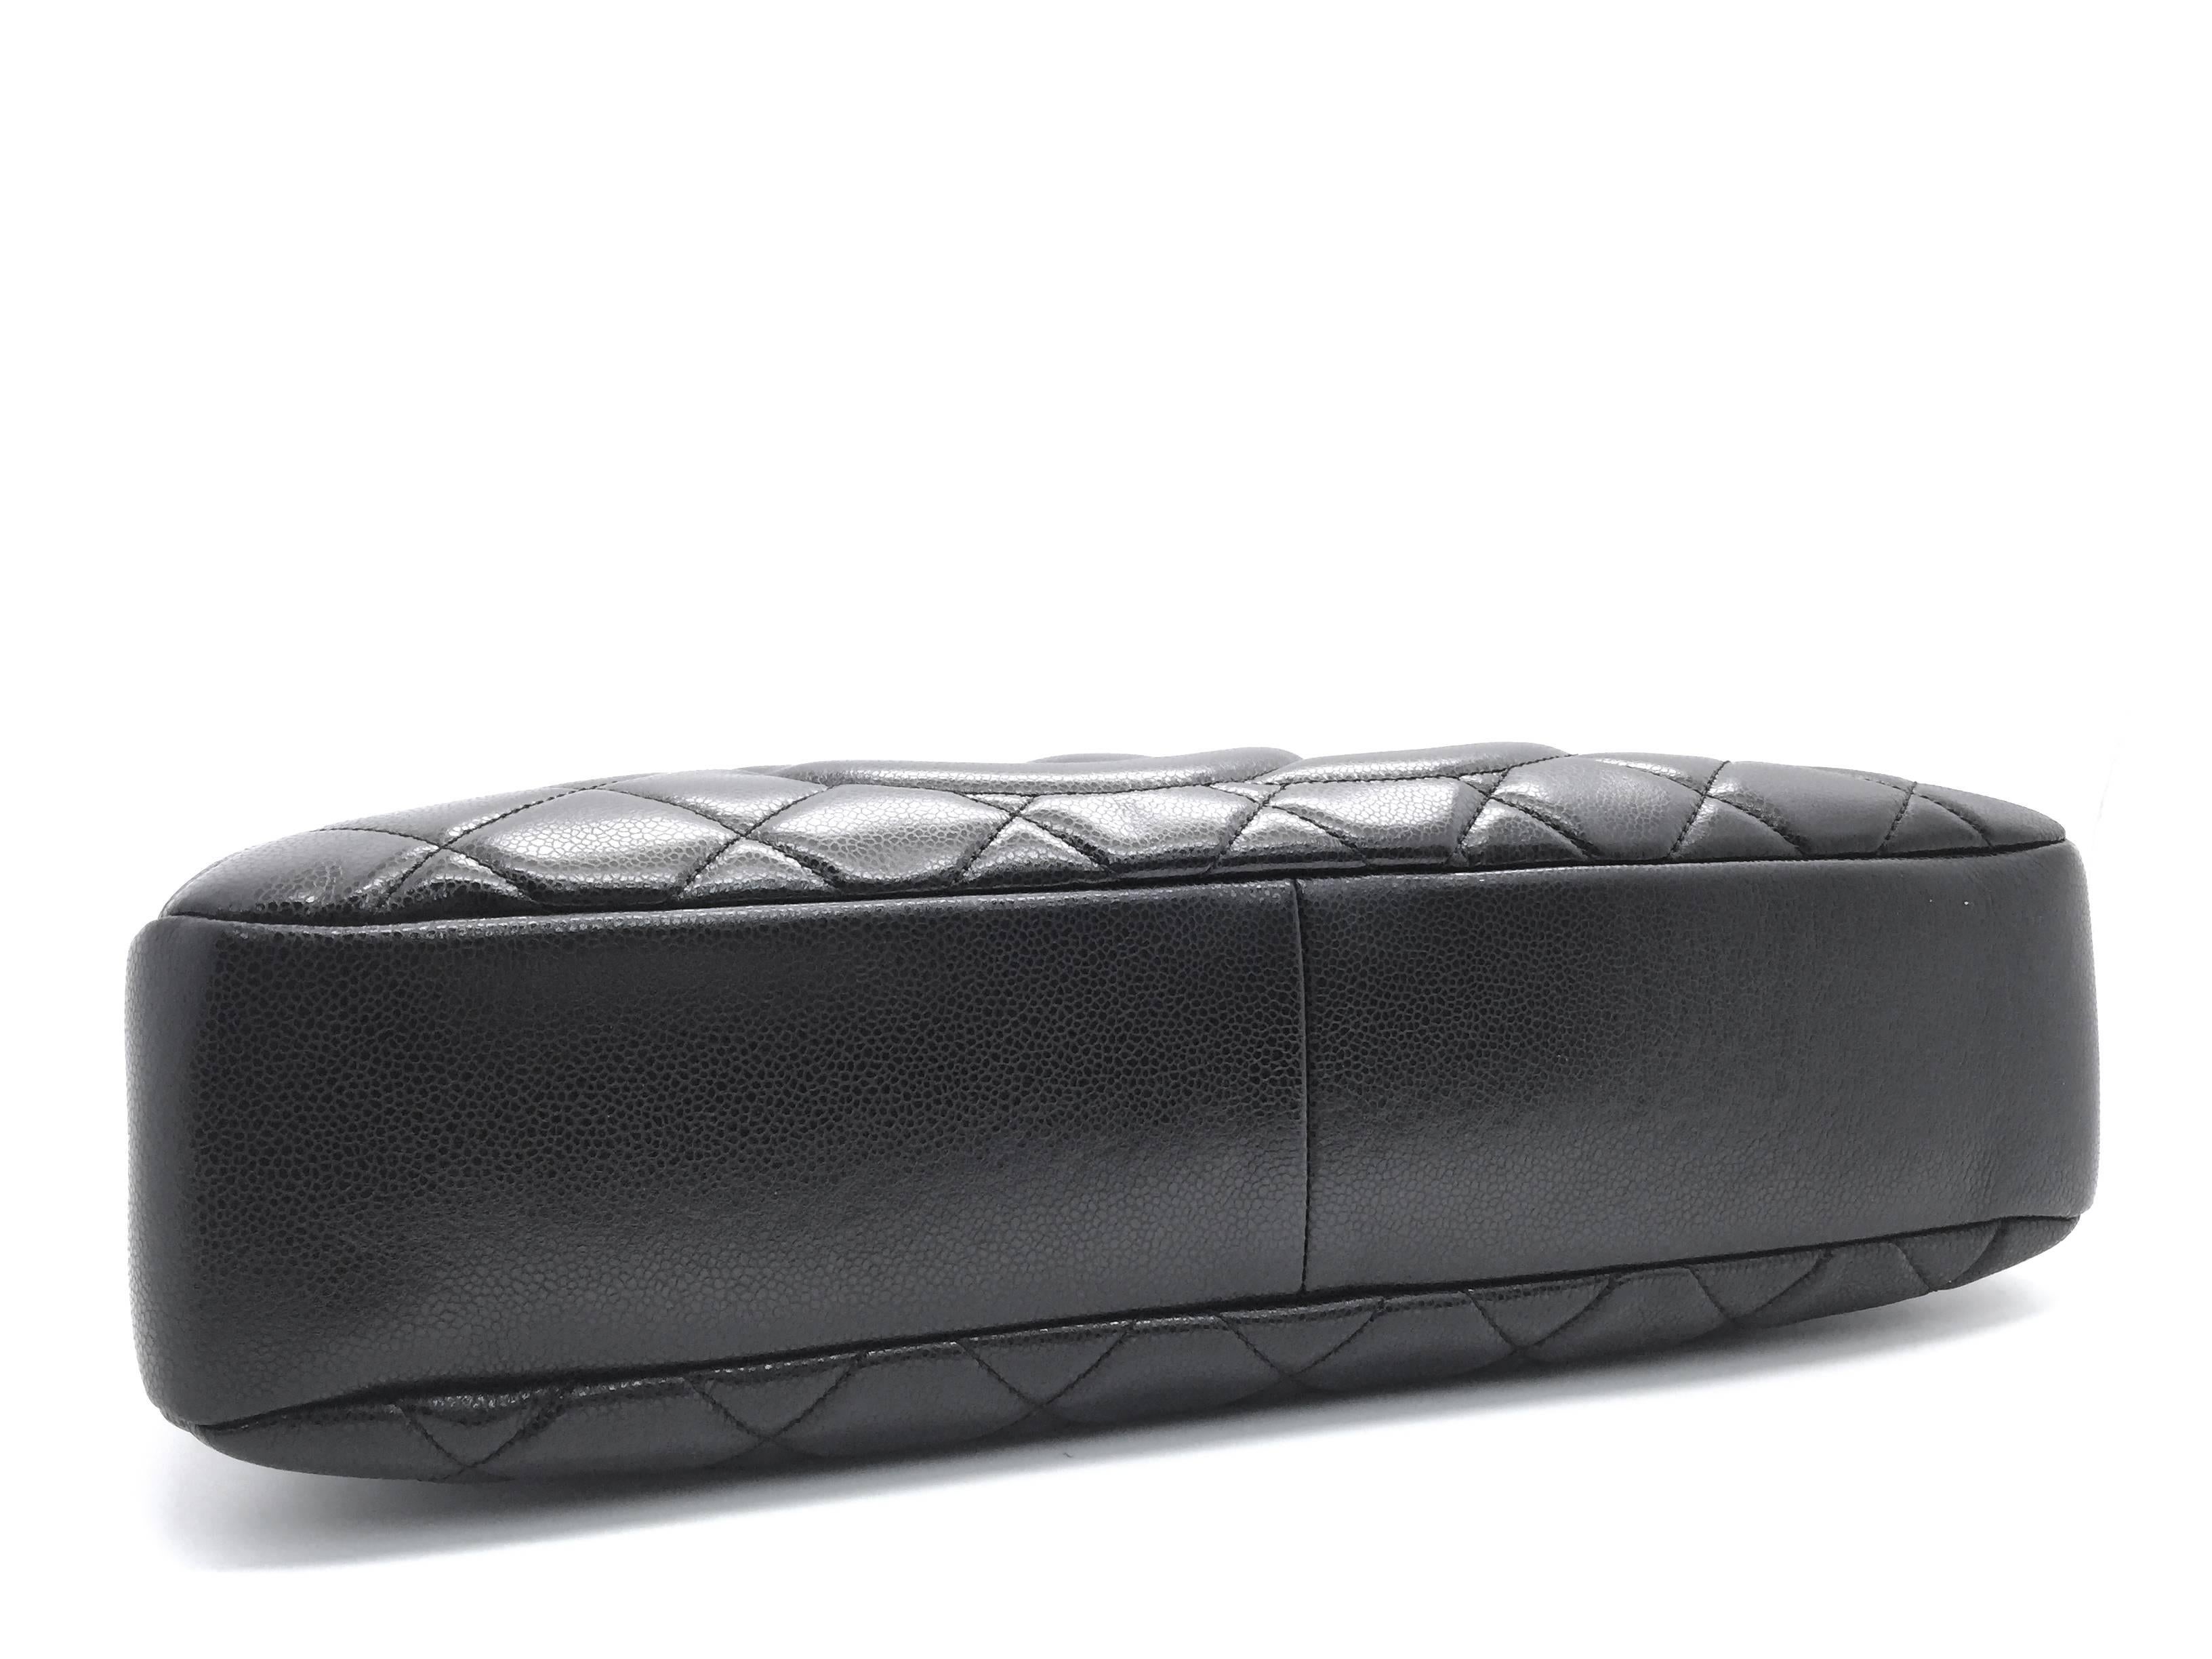 Chanel Black Quilted Calfskin Leather Chain Shoulder Bag 2